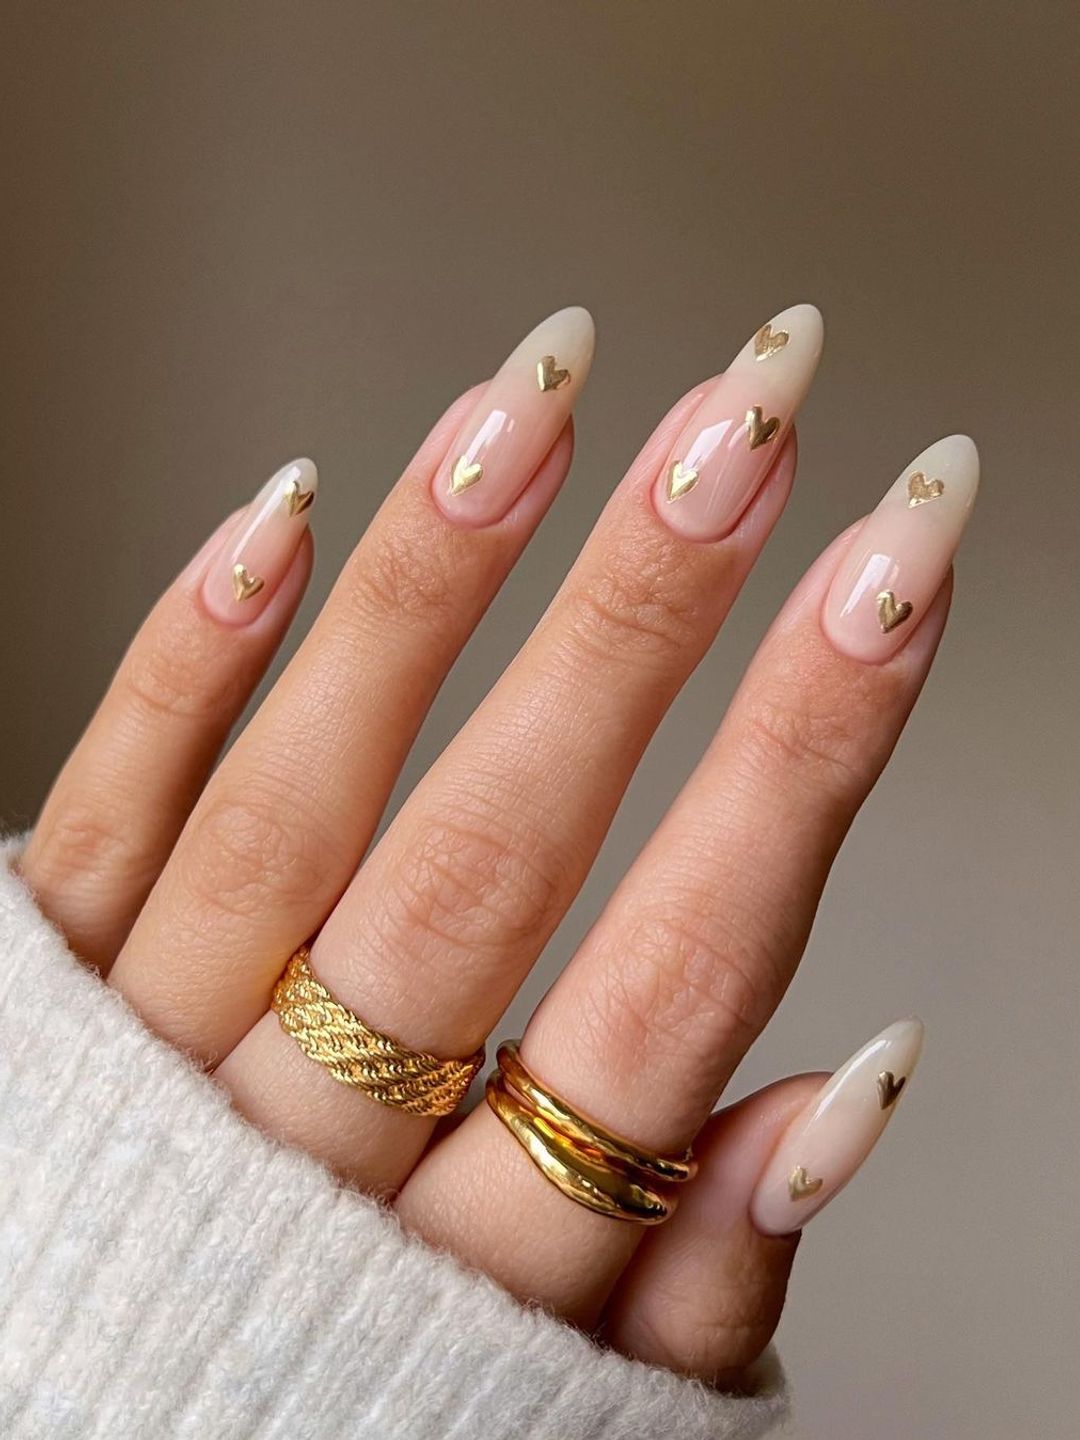 Gold heart nails 